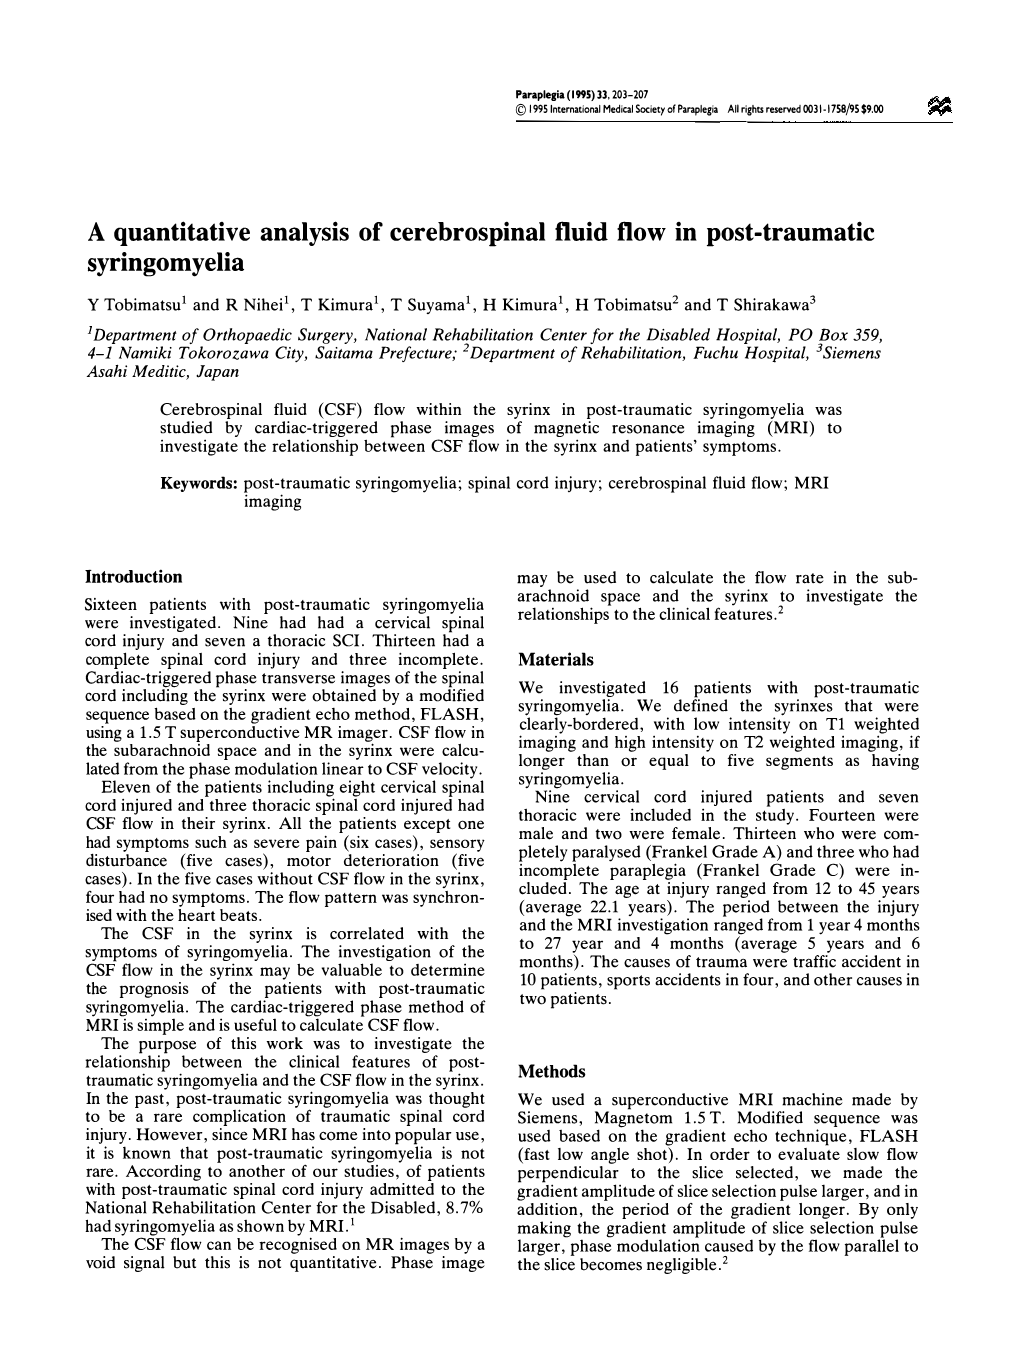 A Quantitative Analysis of Cerebrospinal Fluid Flow in Post-Traumatic Syringomyelia